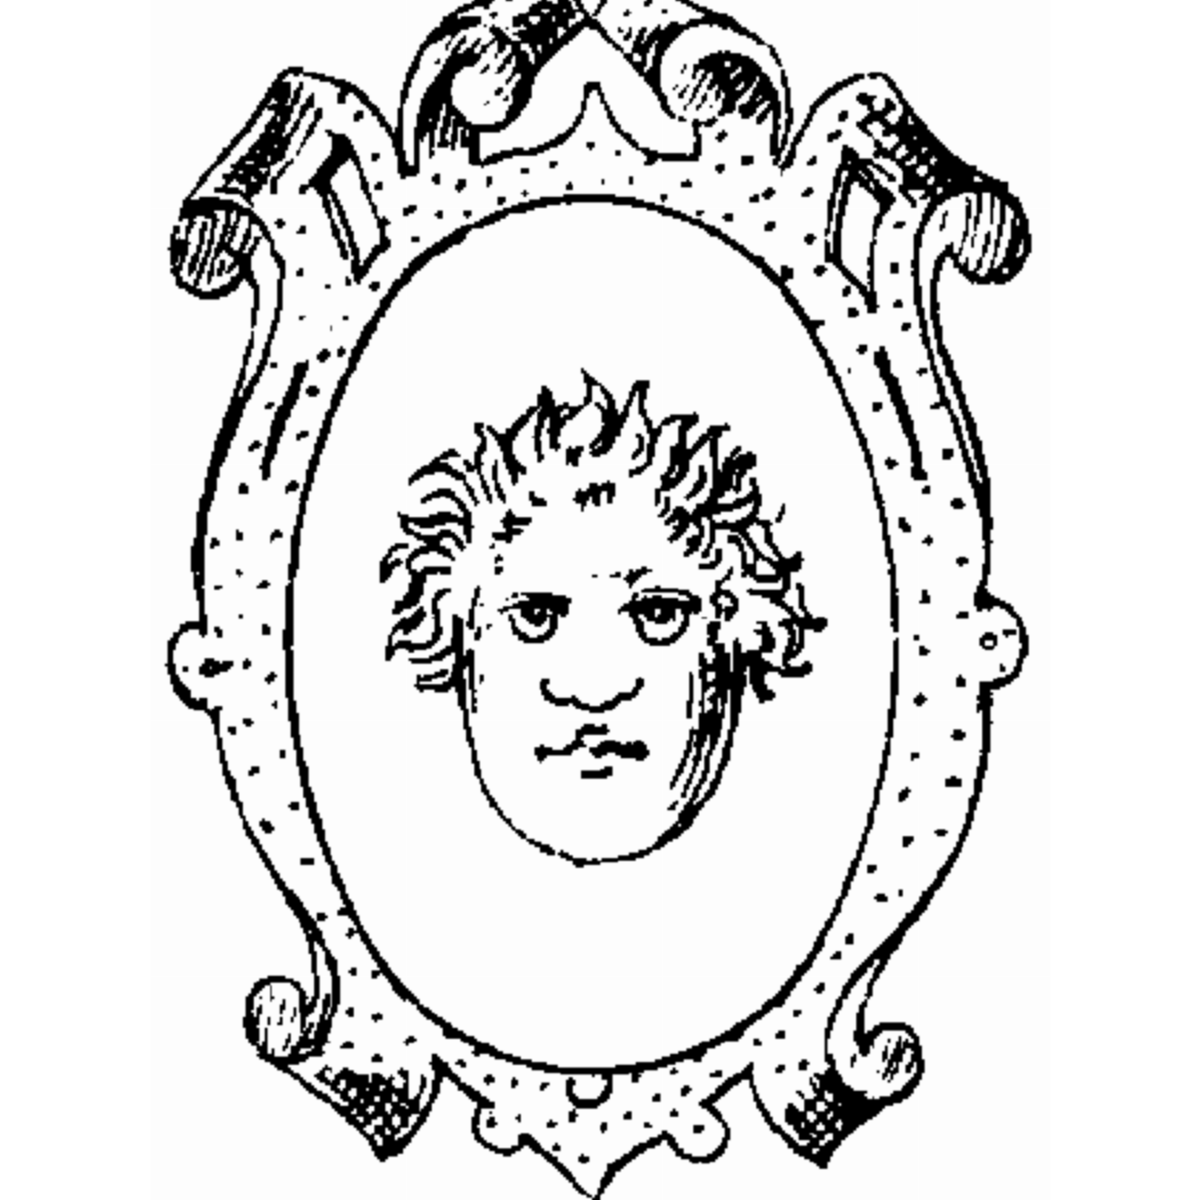 Wappen der Familie Stenglin